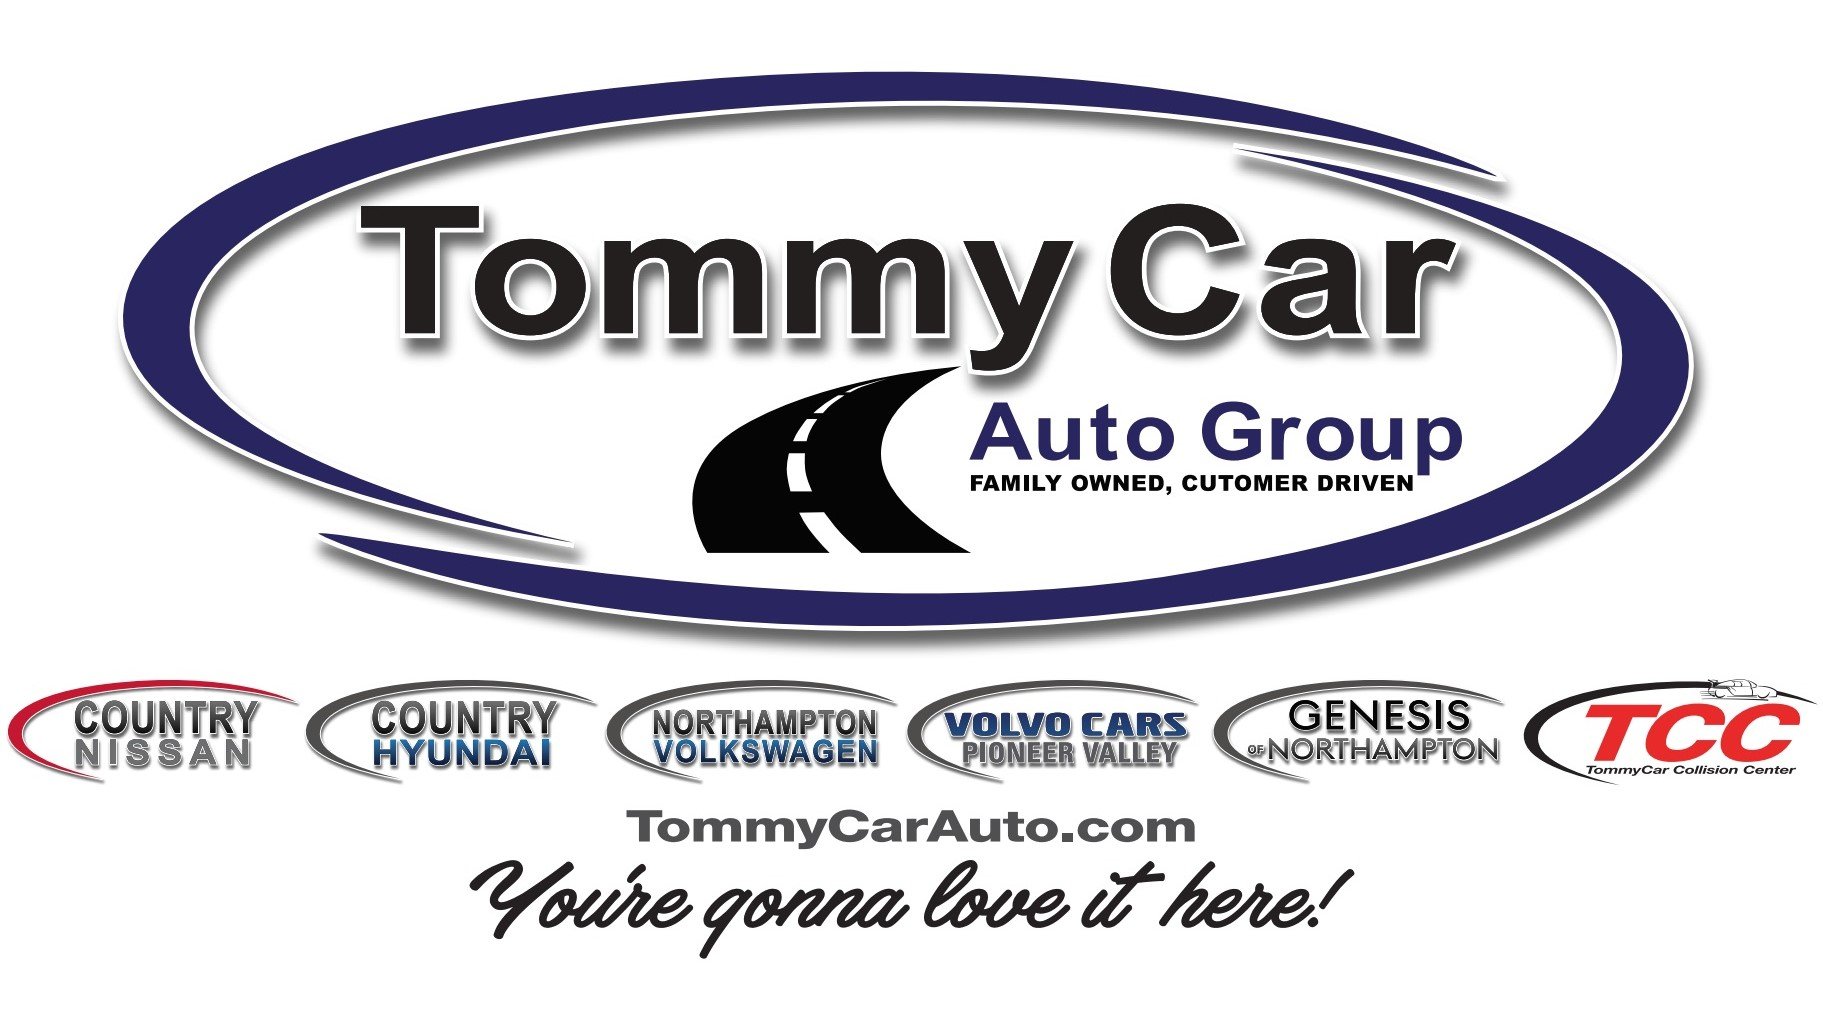  TommyCar Auto Group, sponsor 